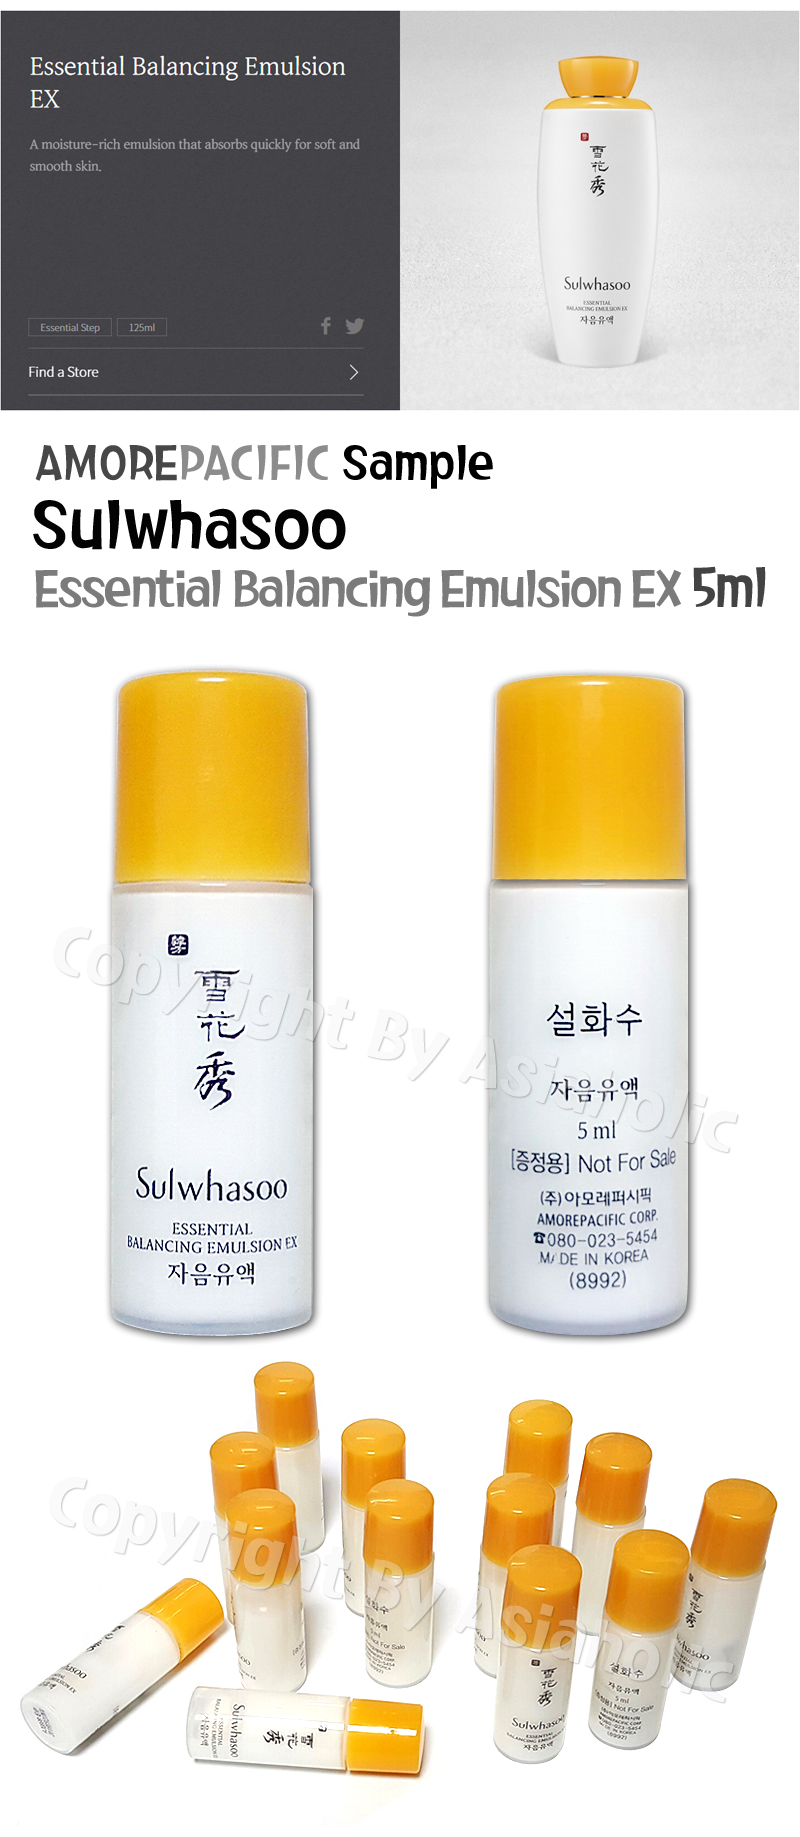 Sulwhasoo Essential Balancing Emulsion EX 5ml x 20pcs (100ml) Sample AMORE PACIFIC